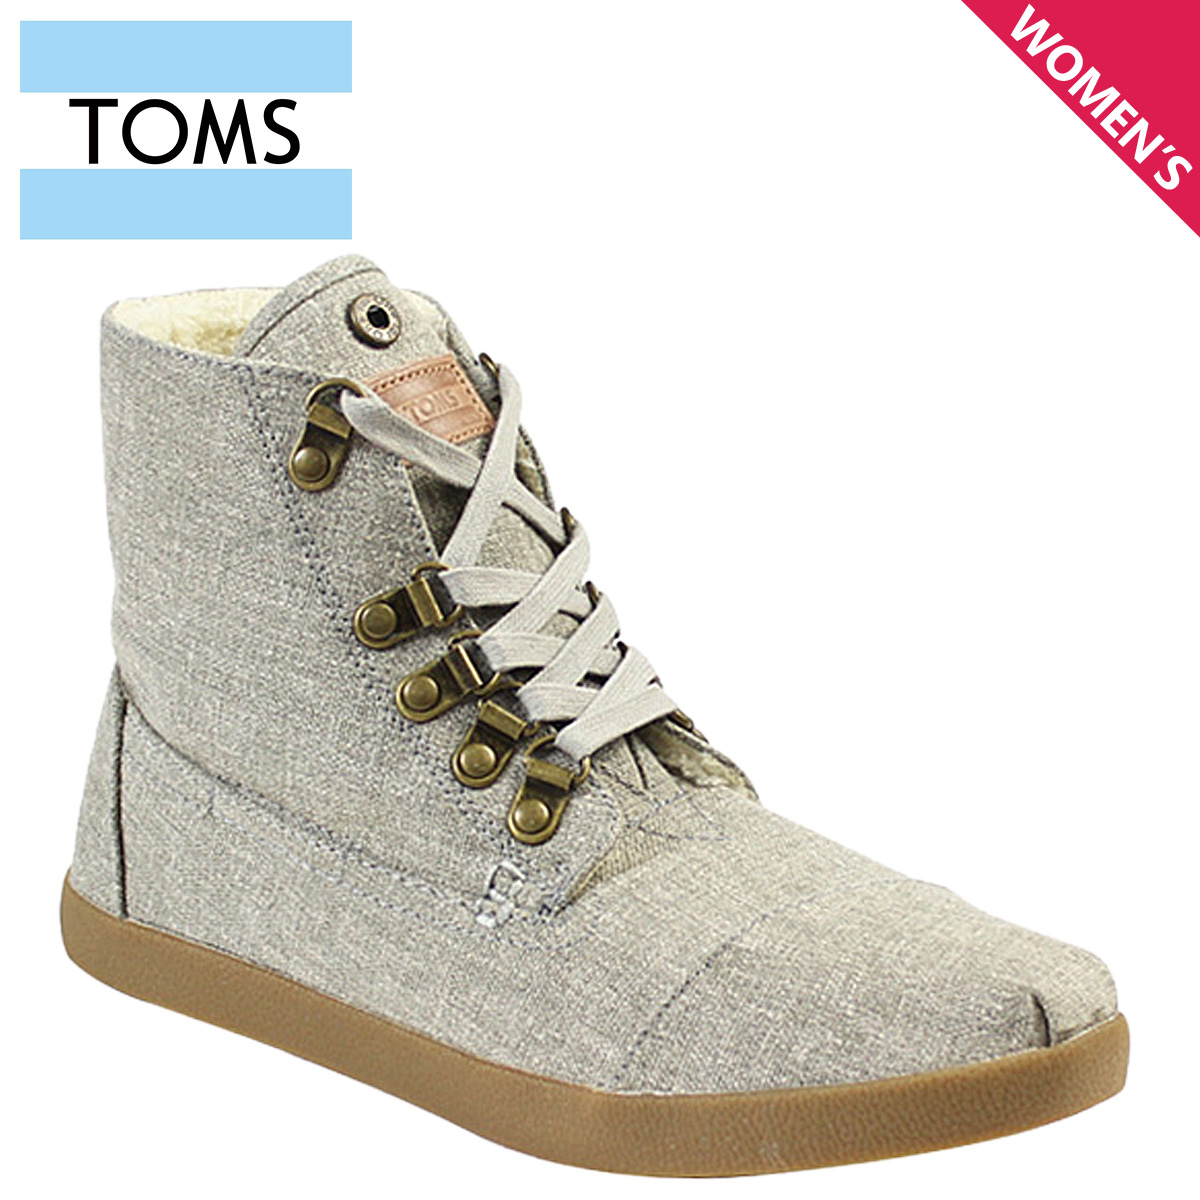 toms shoes boots